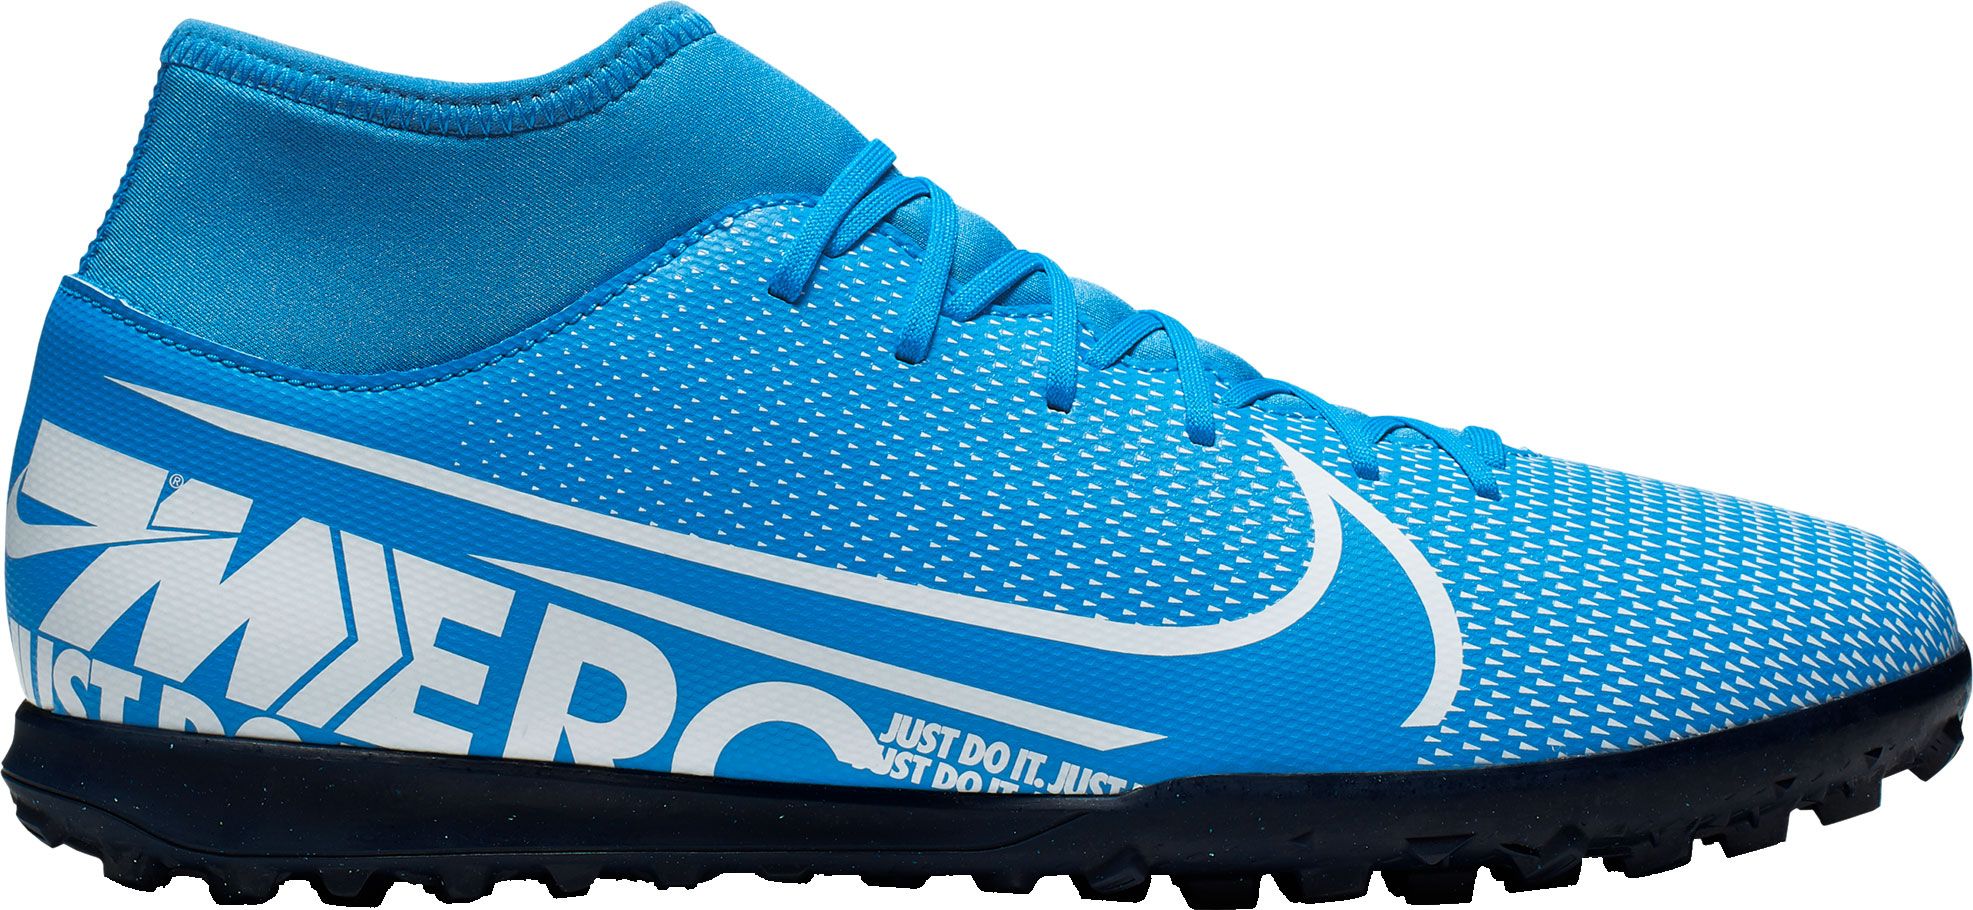 blue nike mercurial indoor soccer shoes